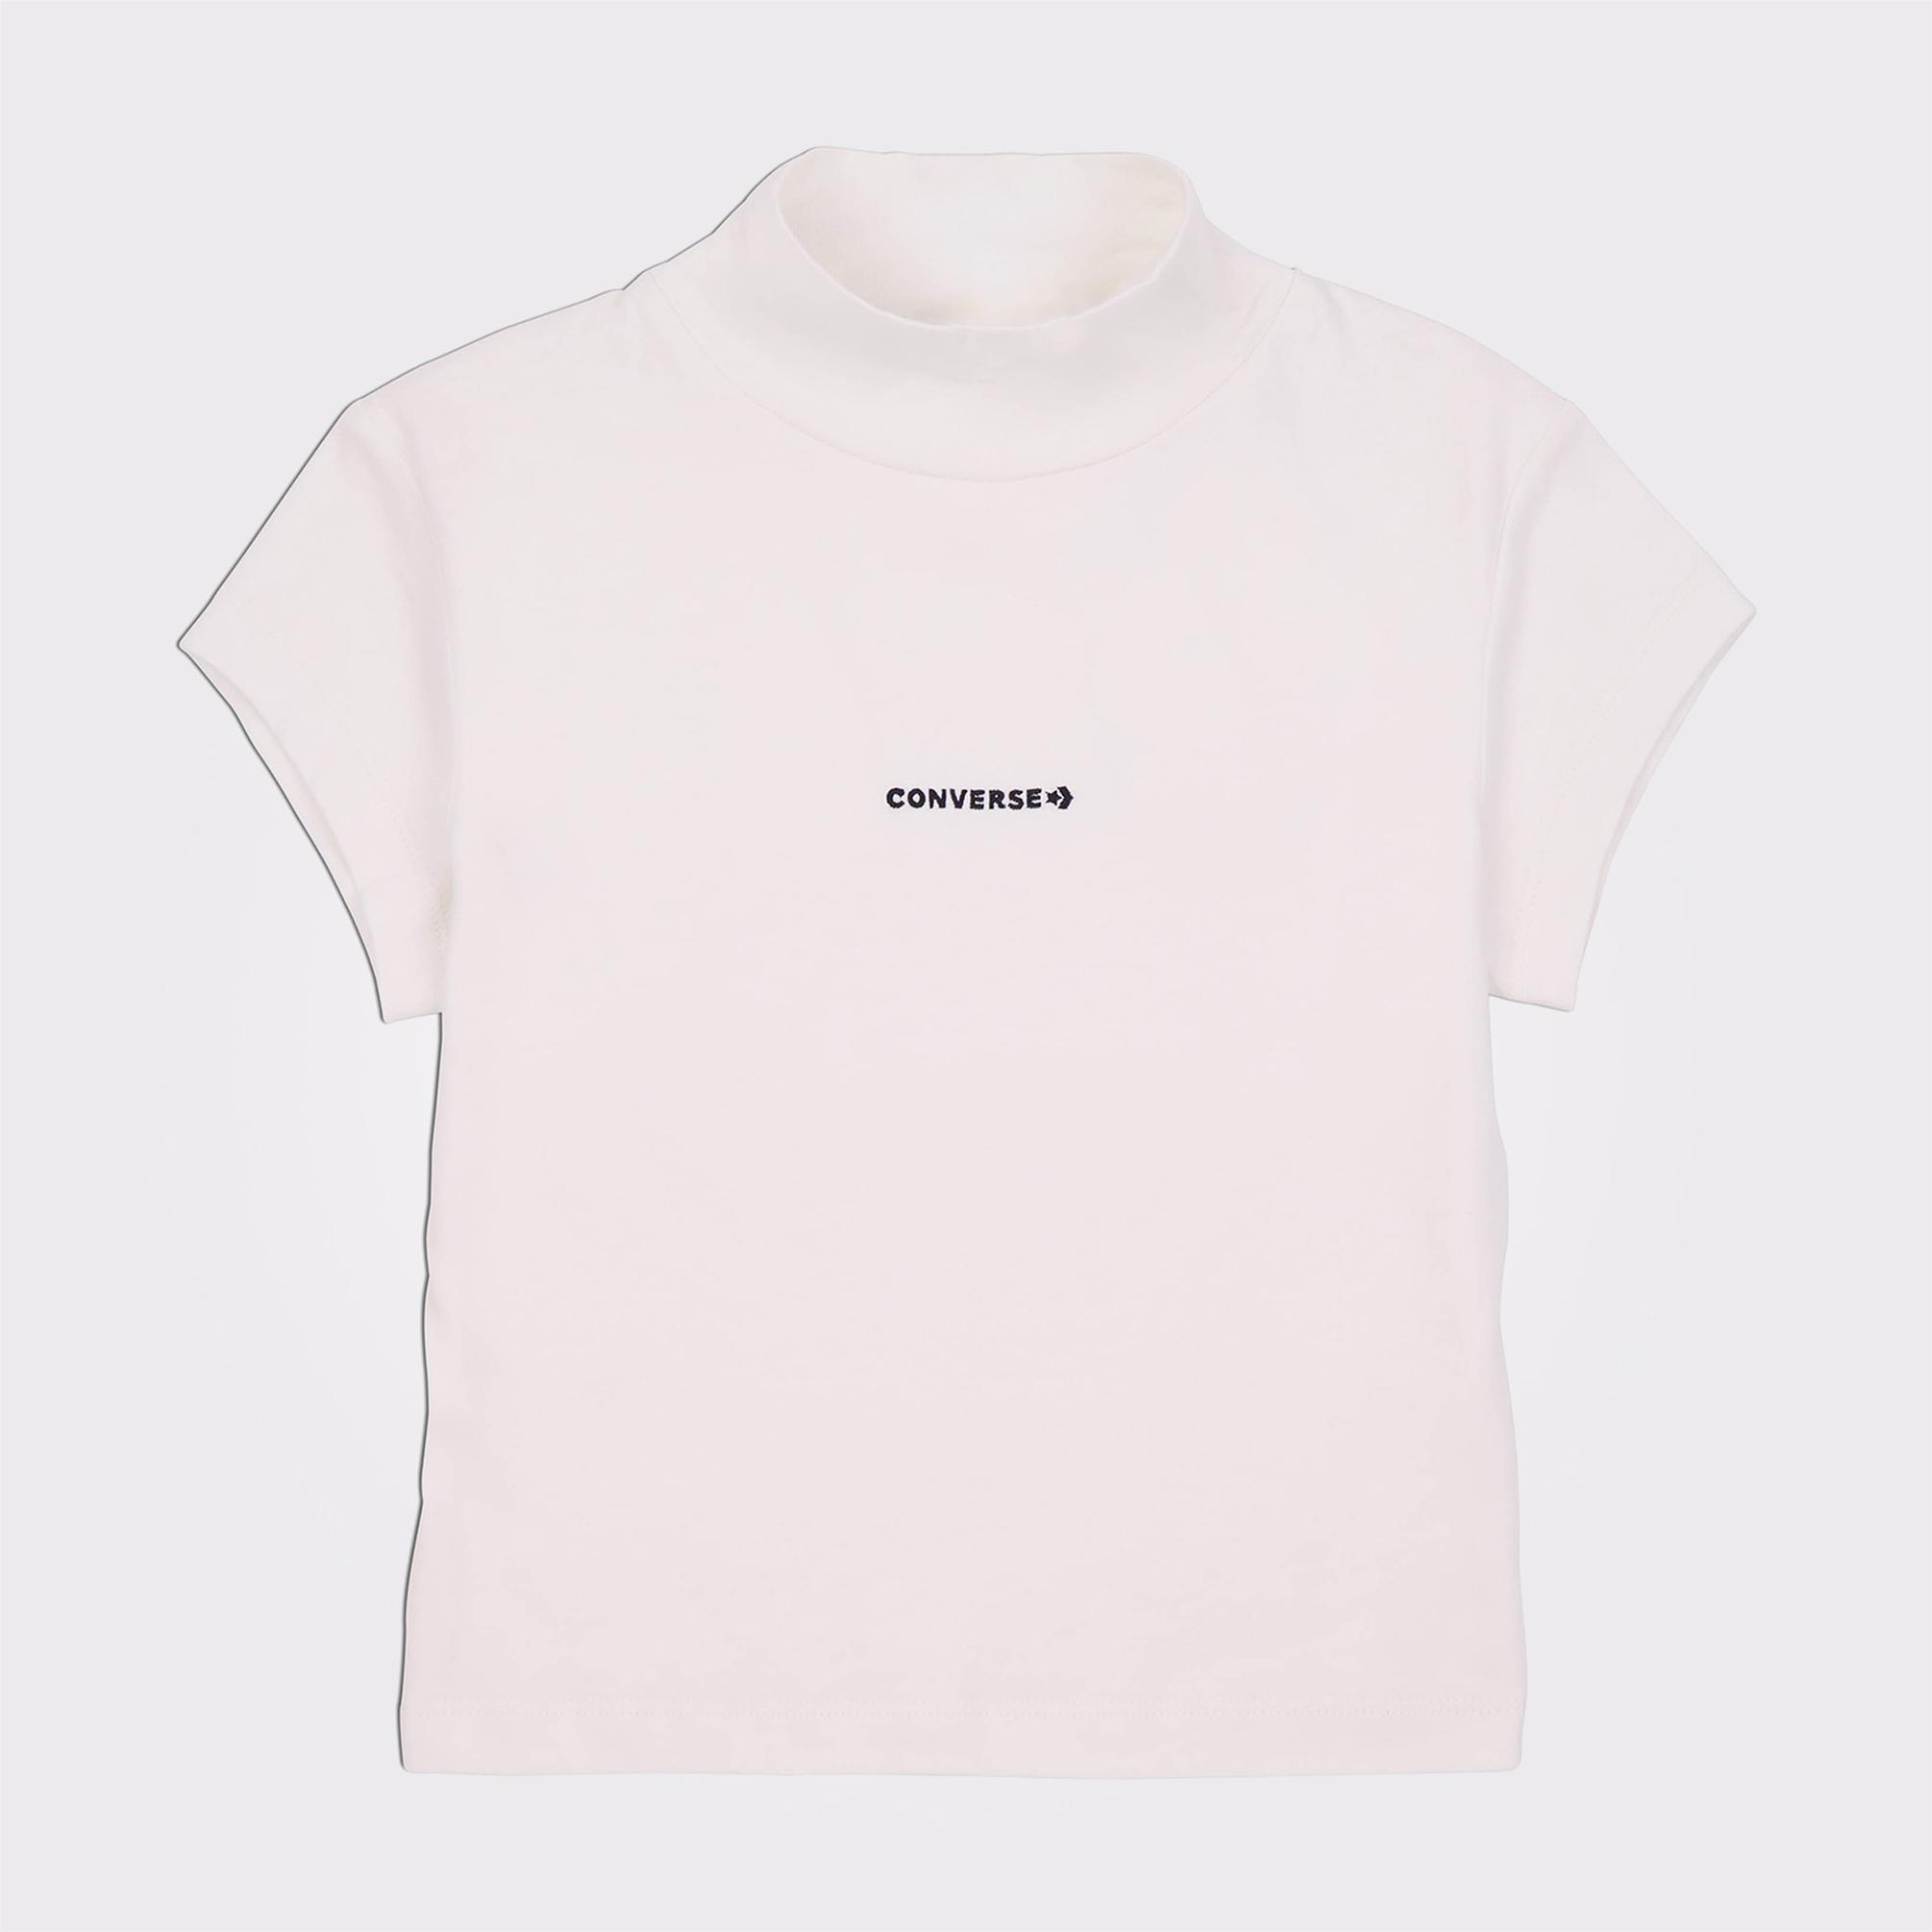  Converse Wordmark Short Sleeve Top Kadın Krem Crop T-Shirt